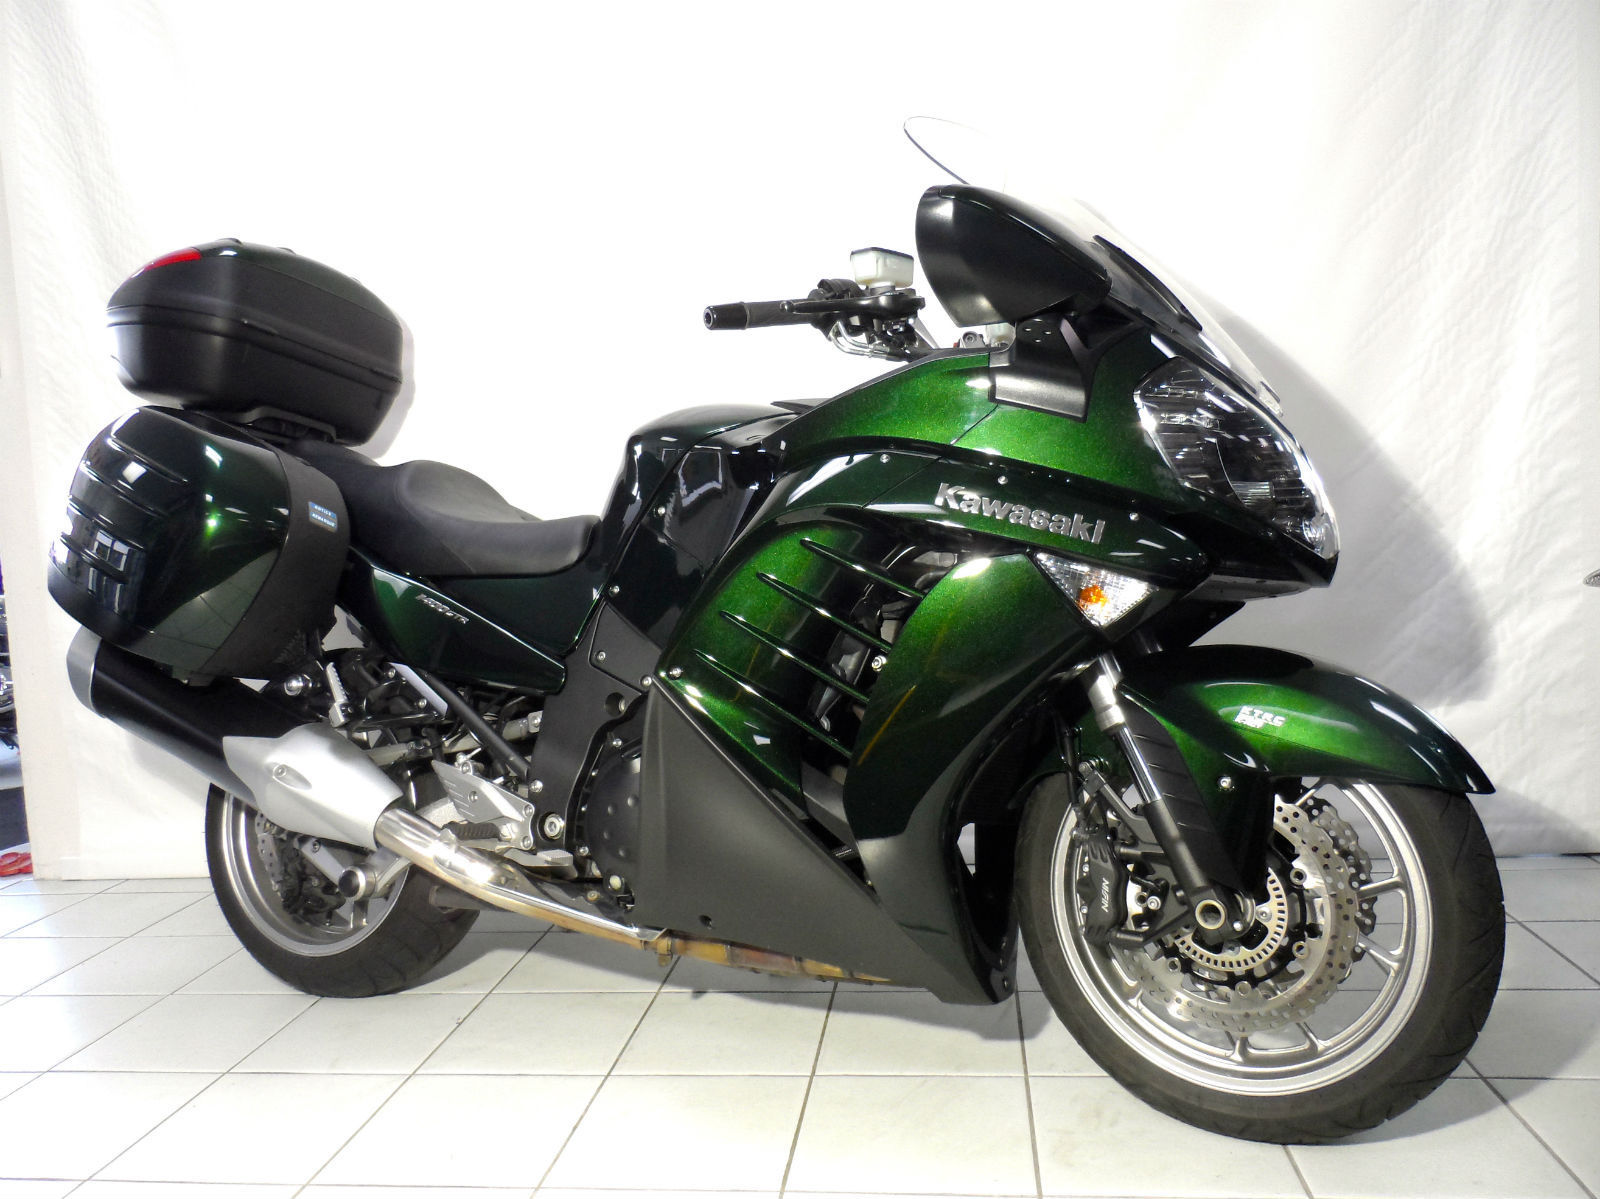 Обзор мотоцикла kawasaki z1000 r edition - стиль, динамика, сила...